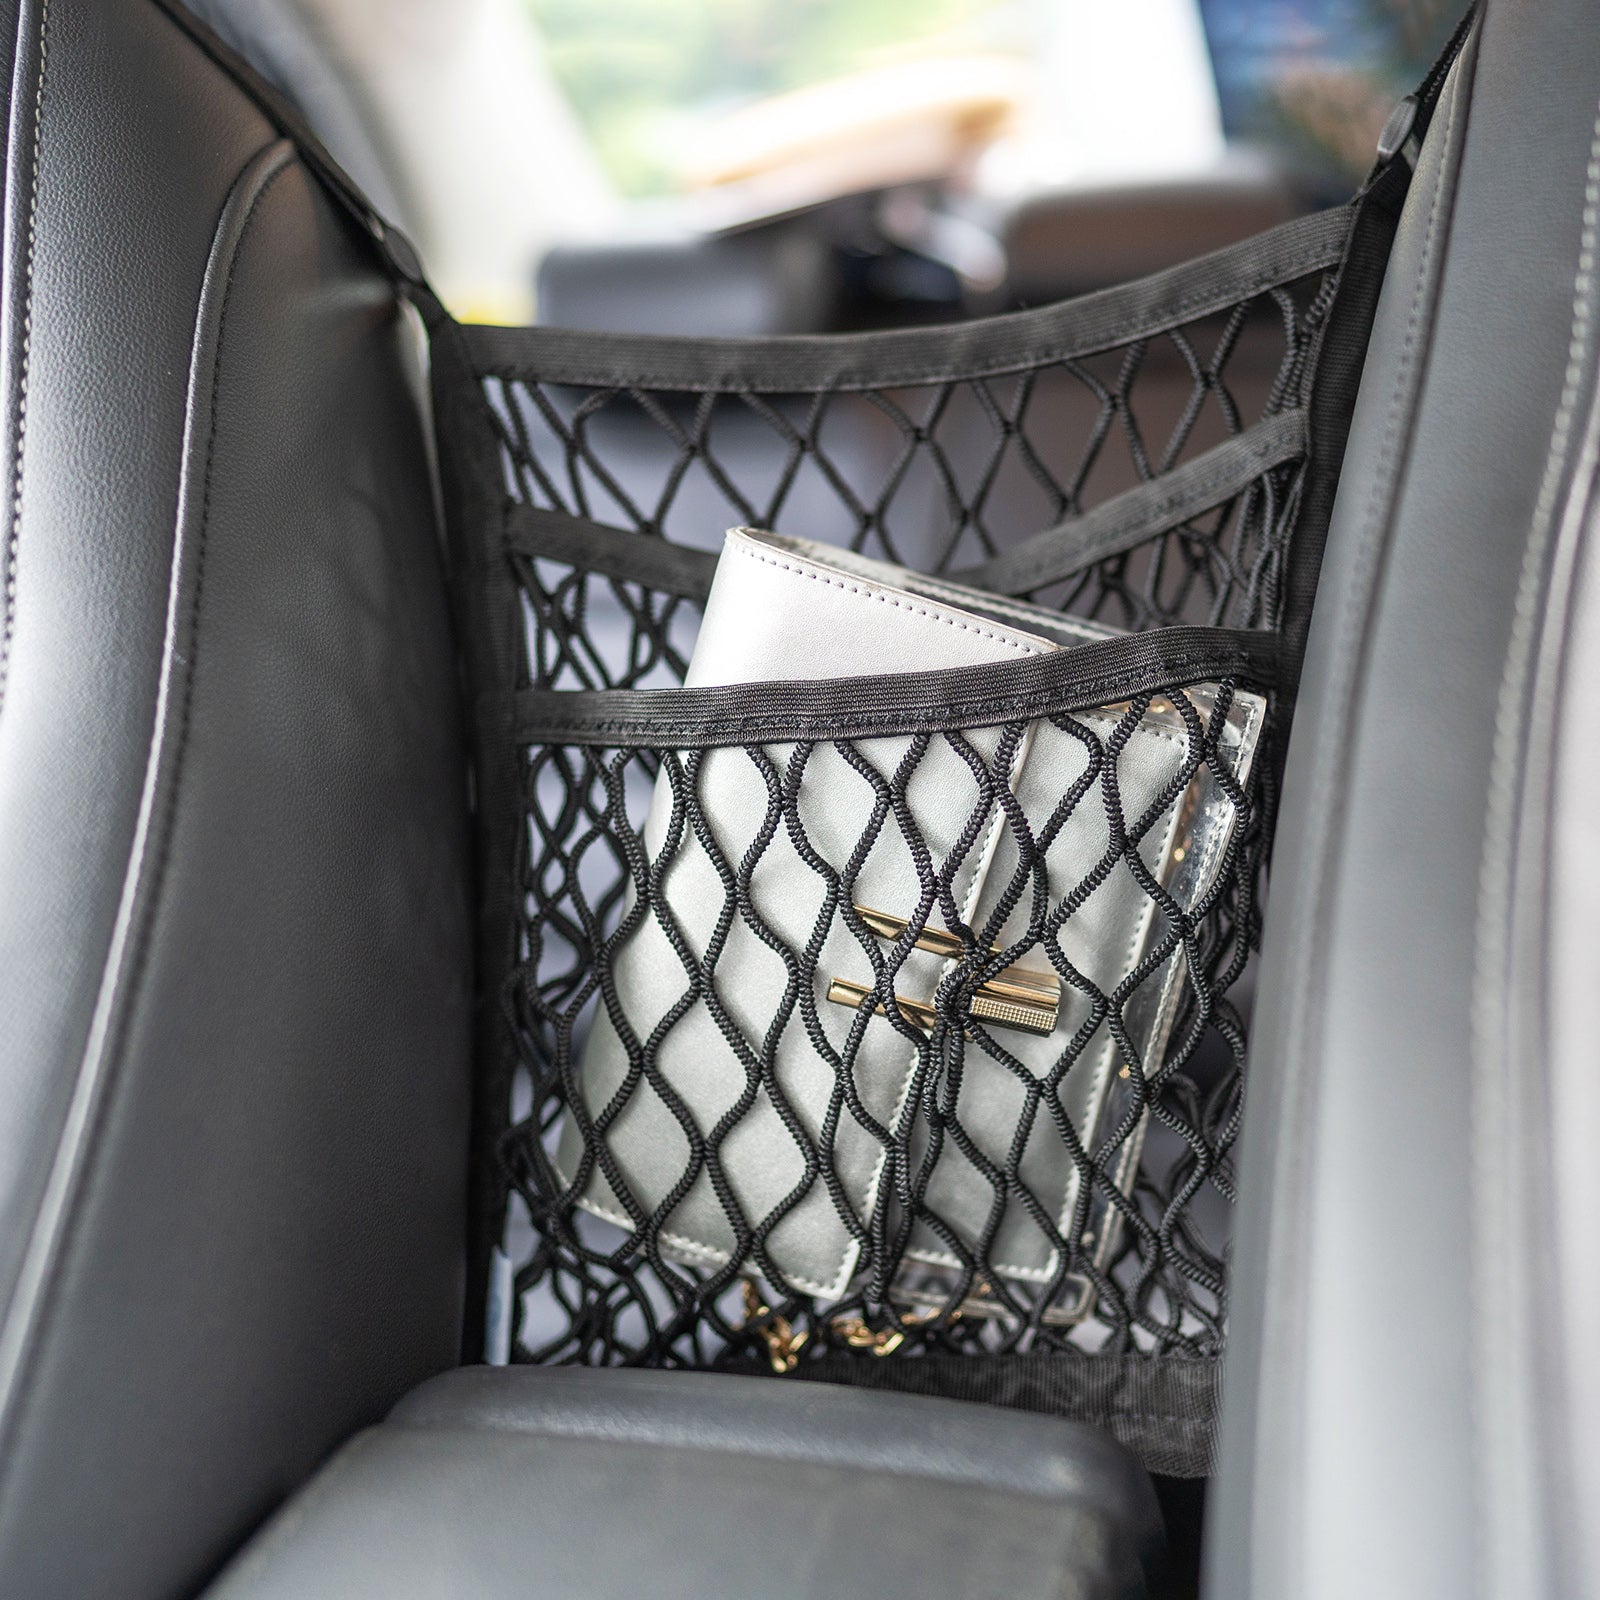 Global Phoenix Car Mesh Organizer 3 Layer Seat Back Net Pocket Bag